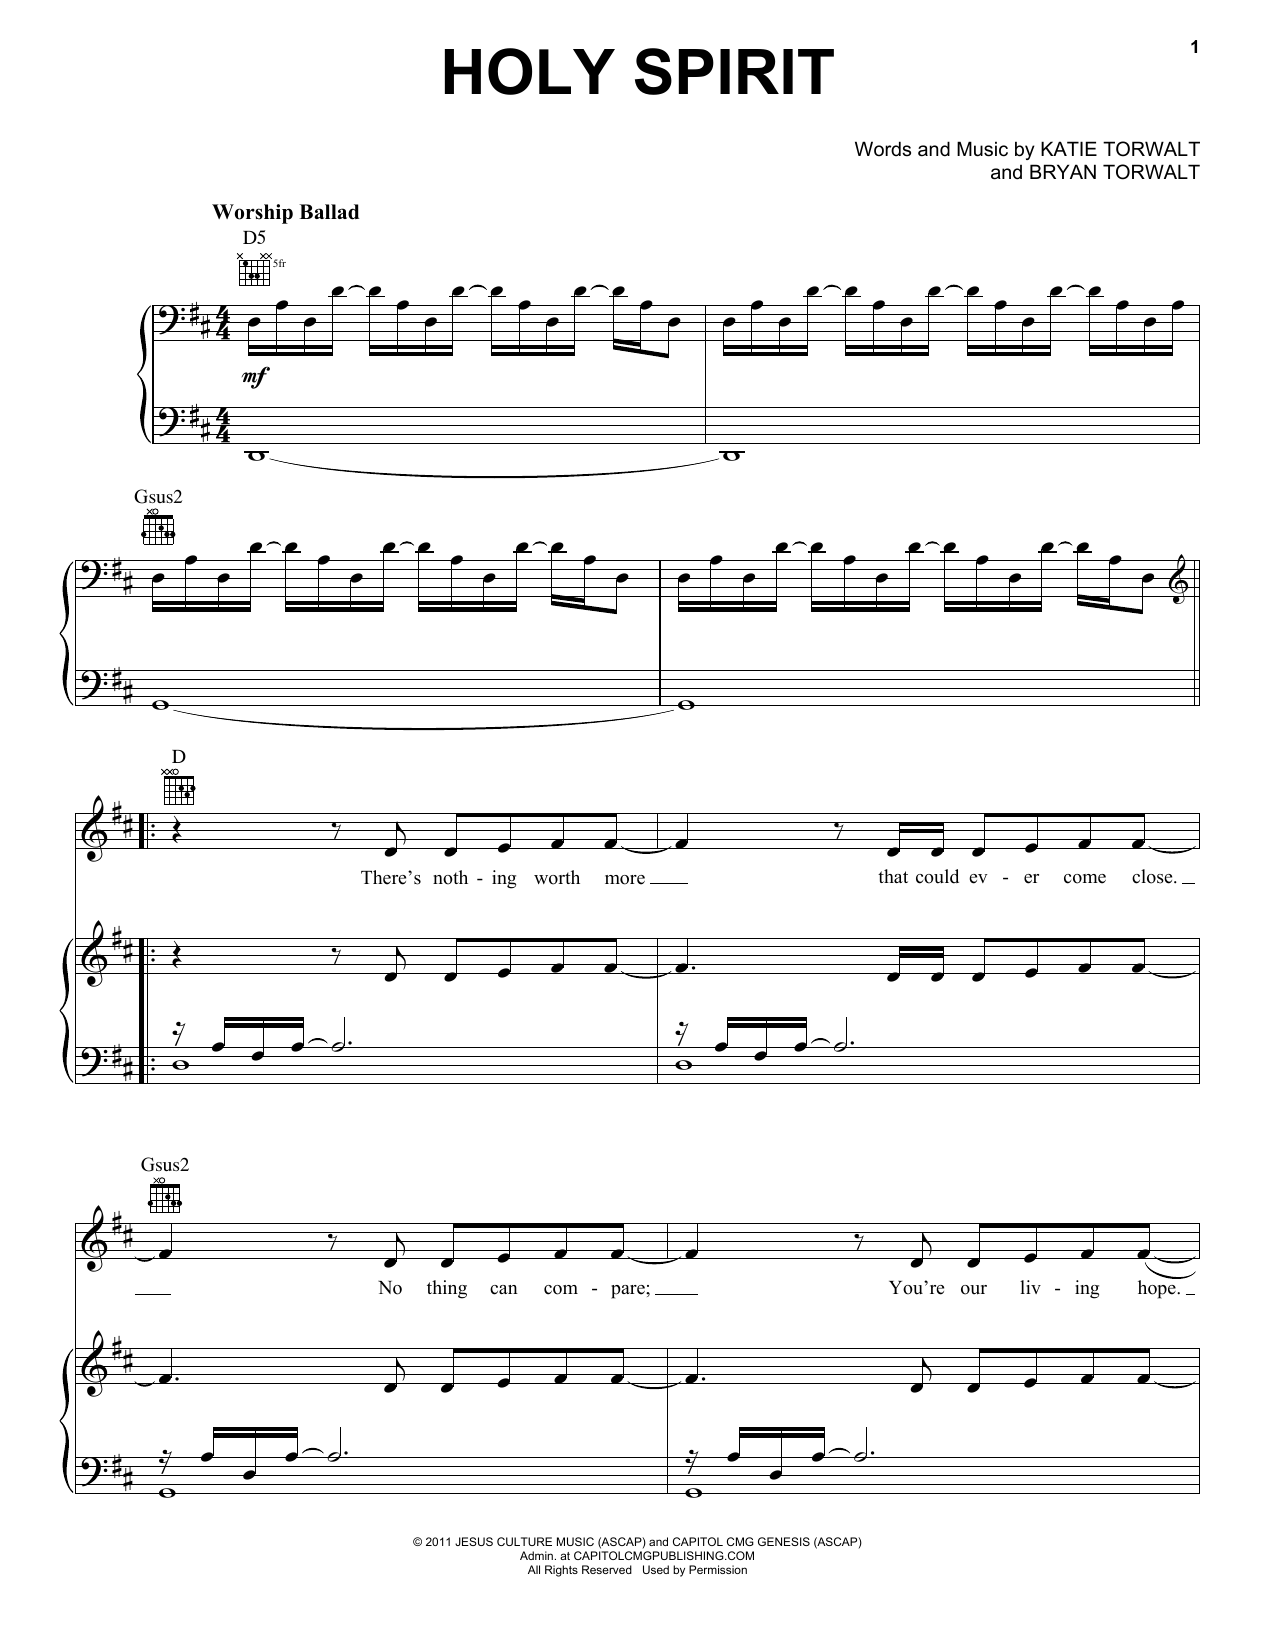 Download Bryan Torwalt Holy Spirit Sheet Music and learn how to play Ukulele PDF digital score in minutes